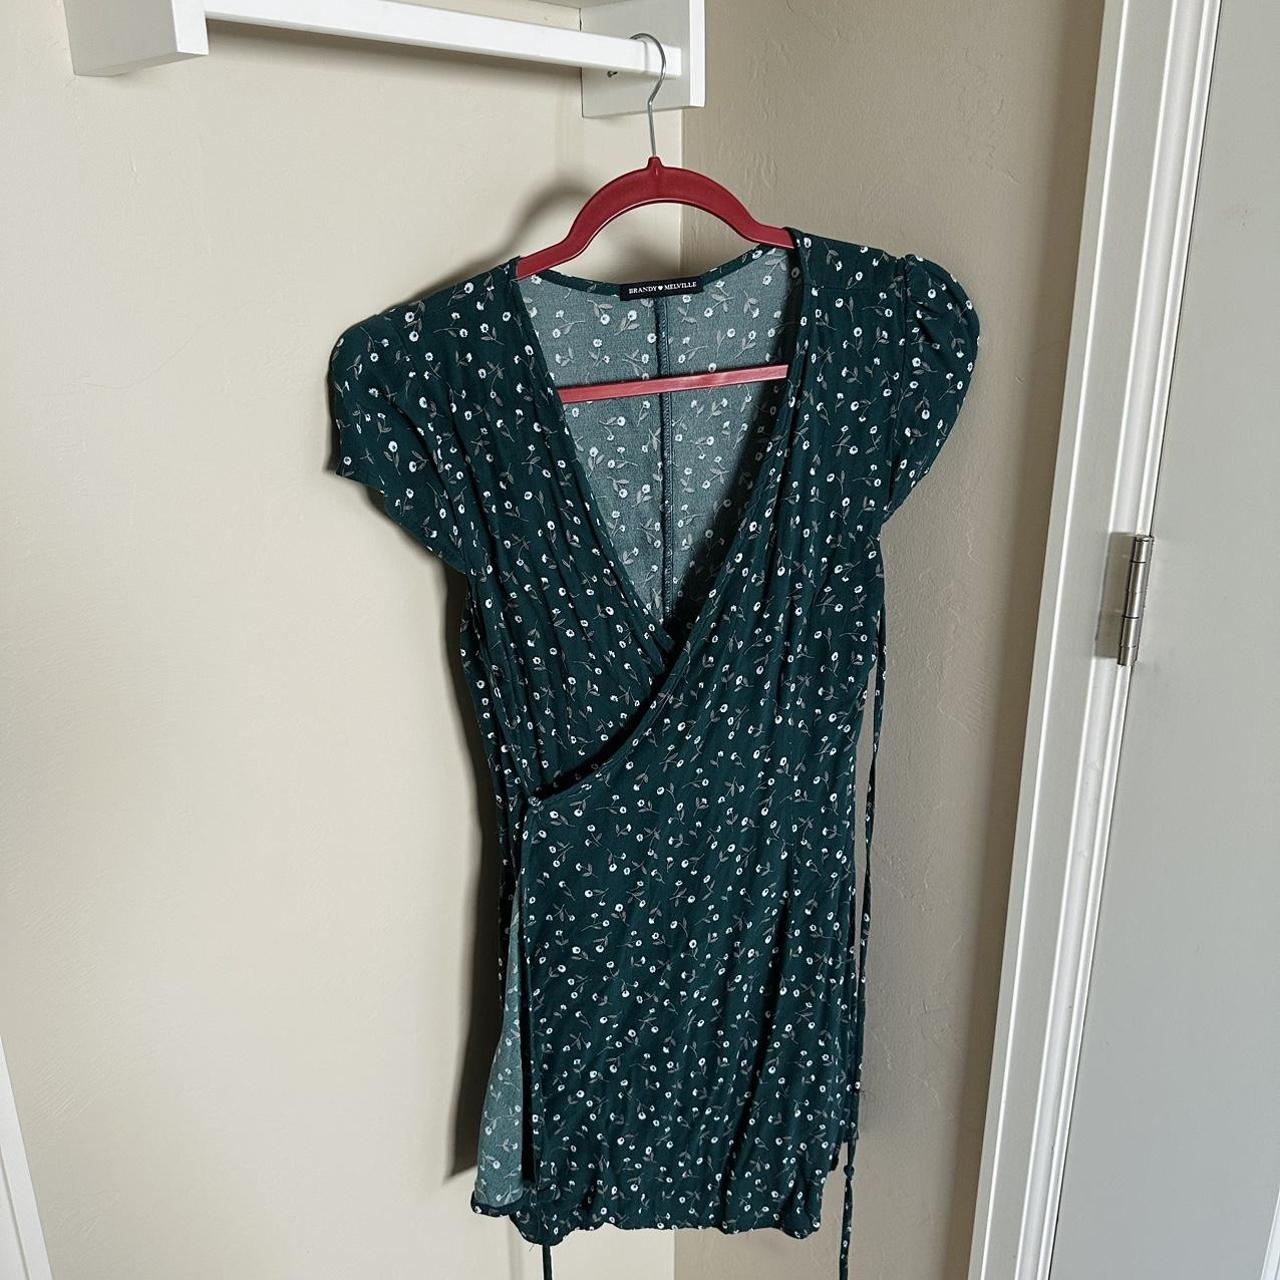 Brandy Melville - Brandy Melville Wrap Dress on Designer Wardrobe